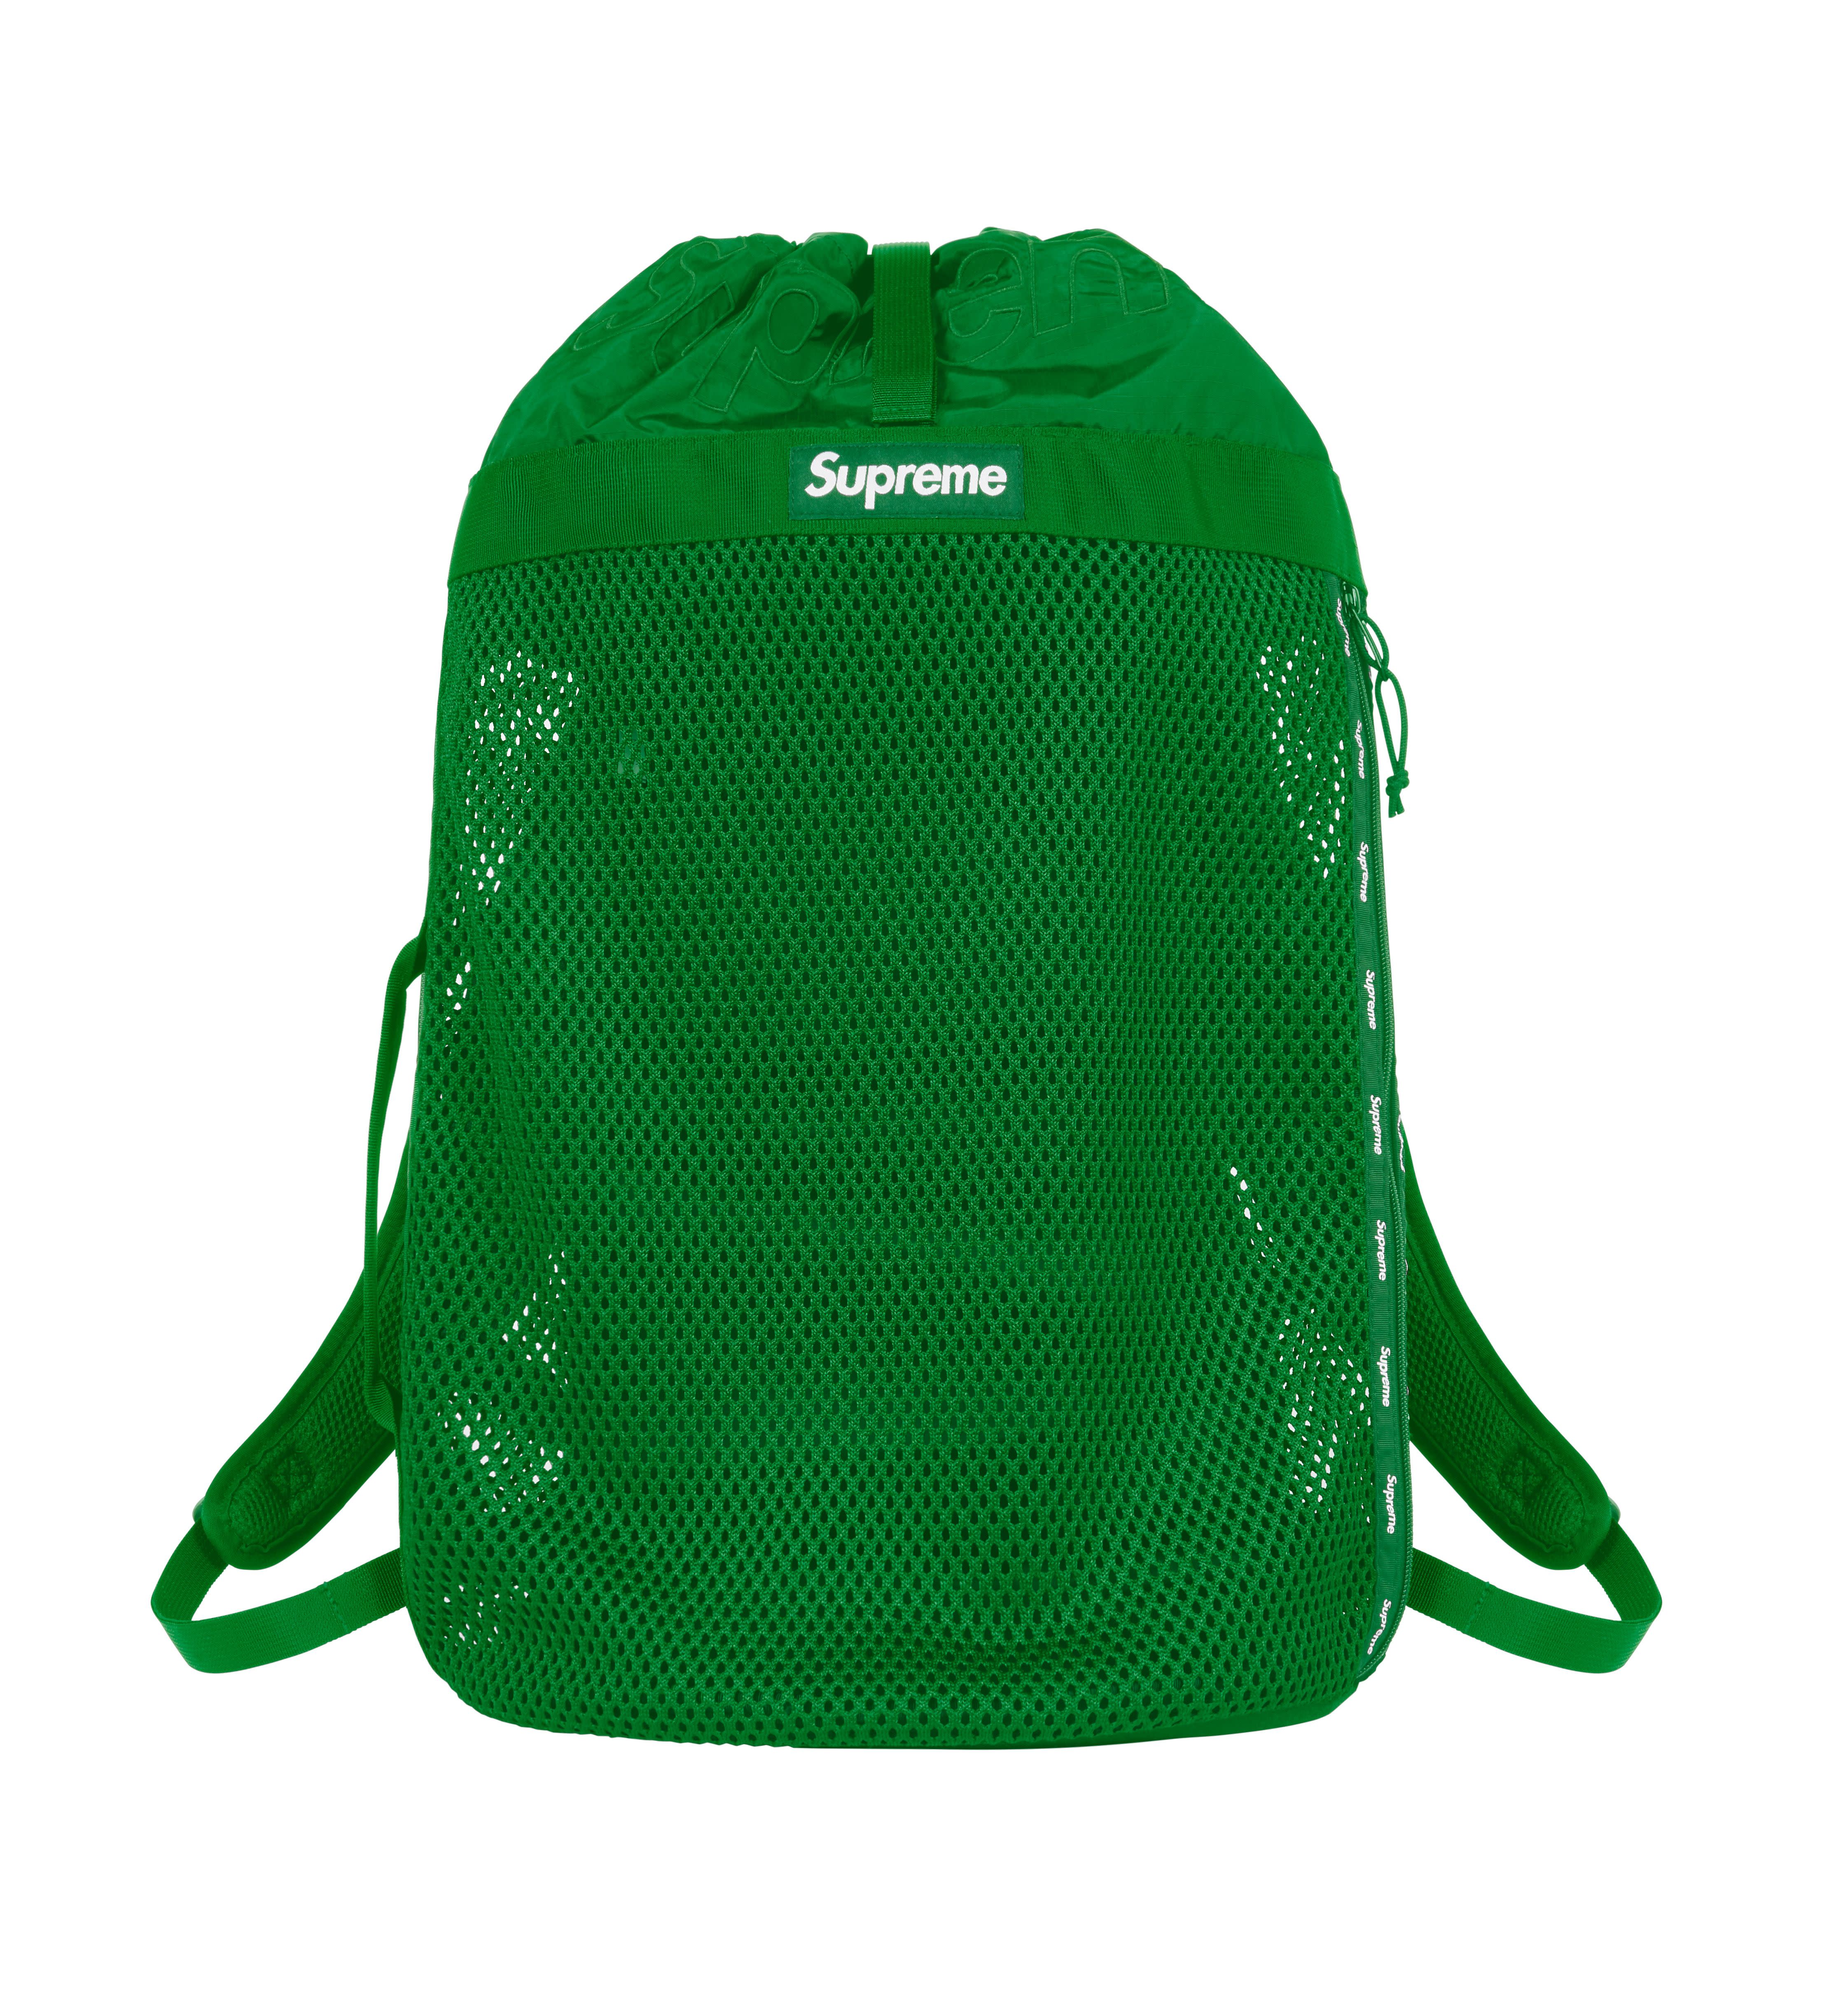 Supreme mesh backpack